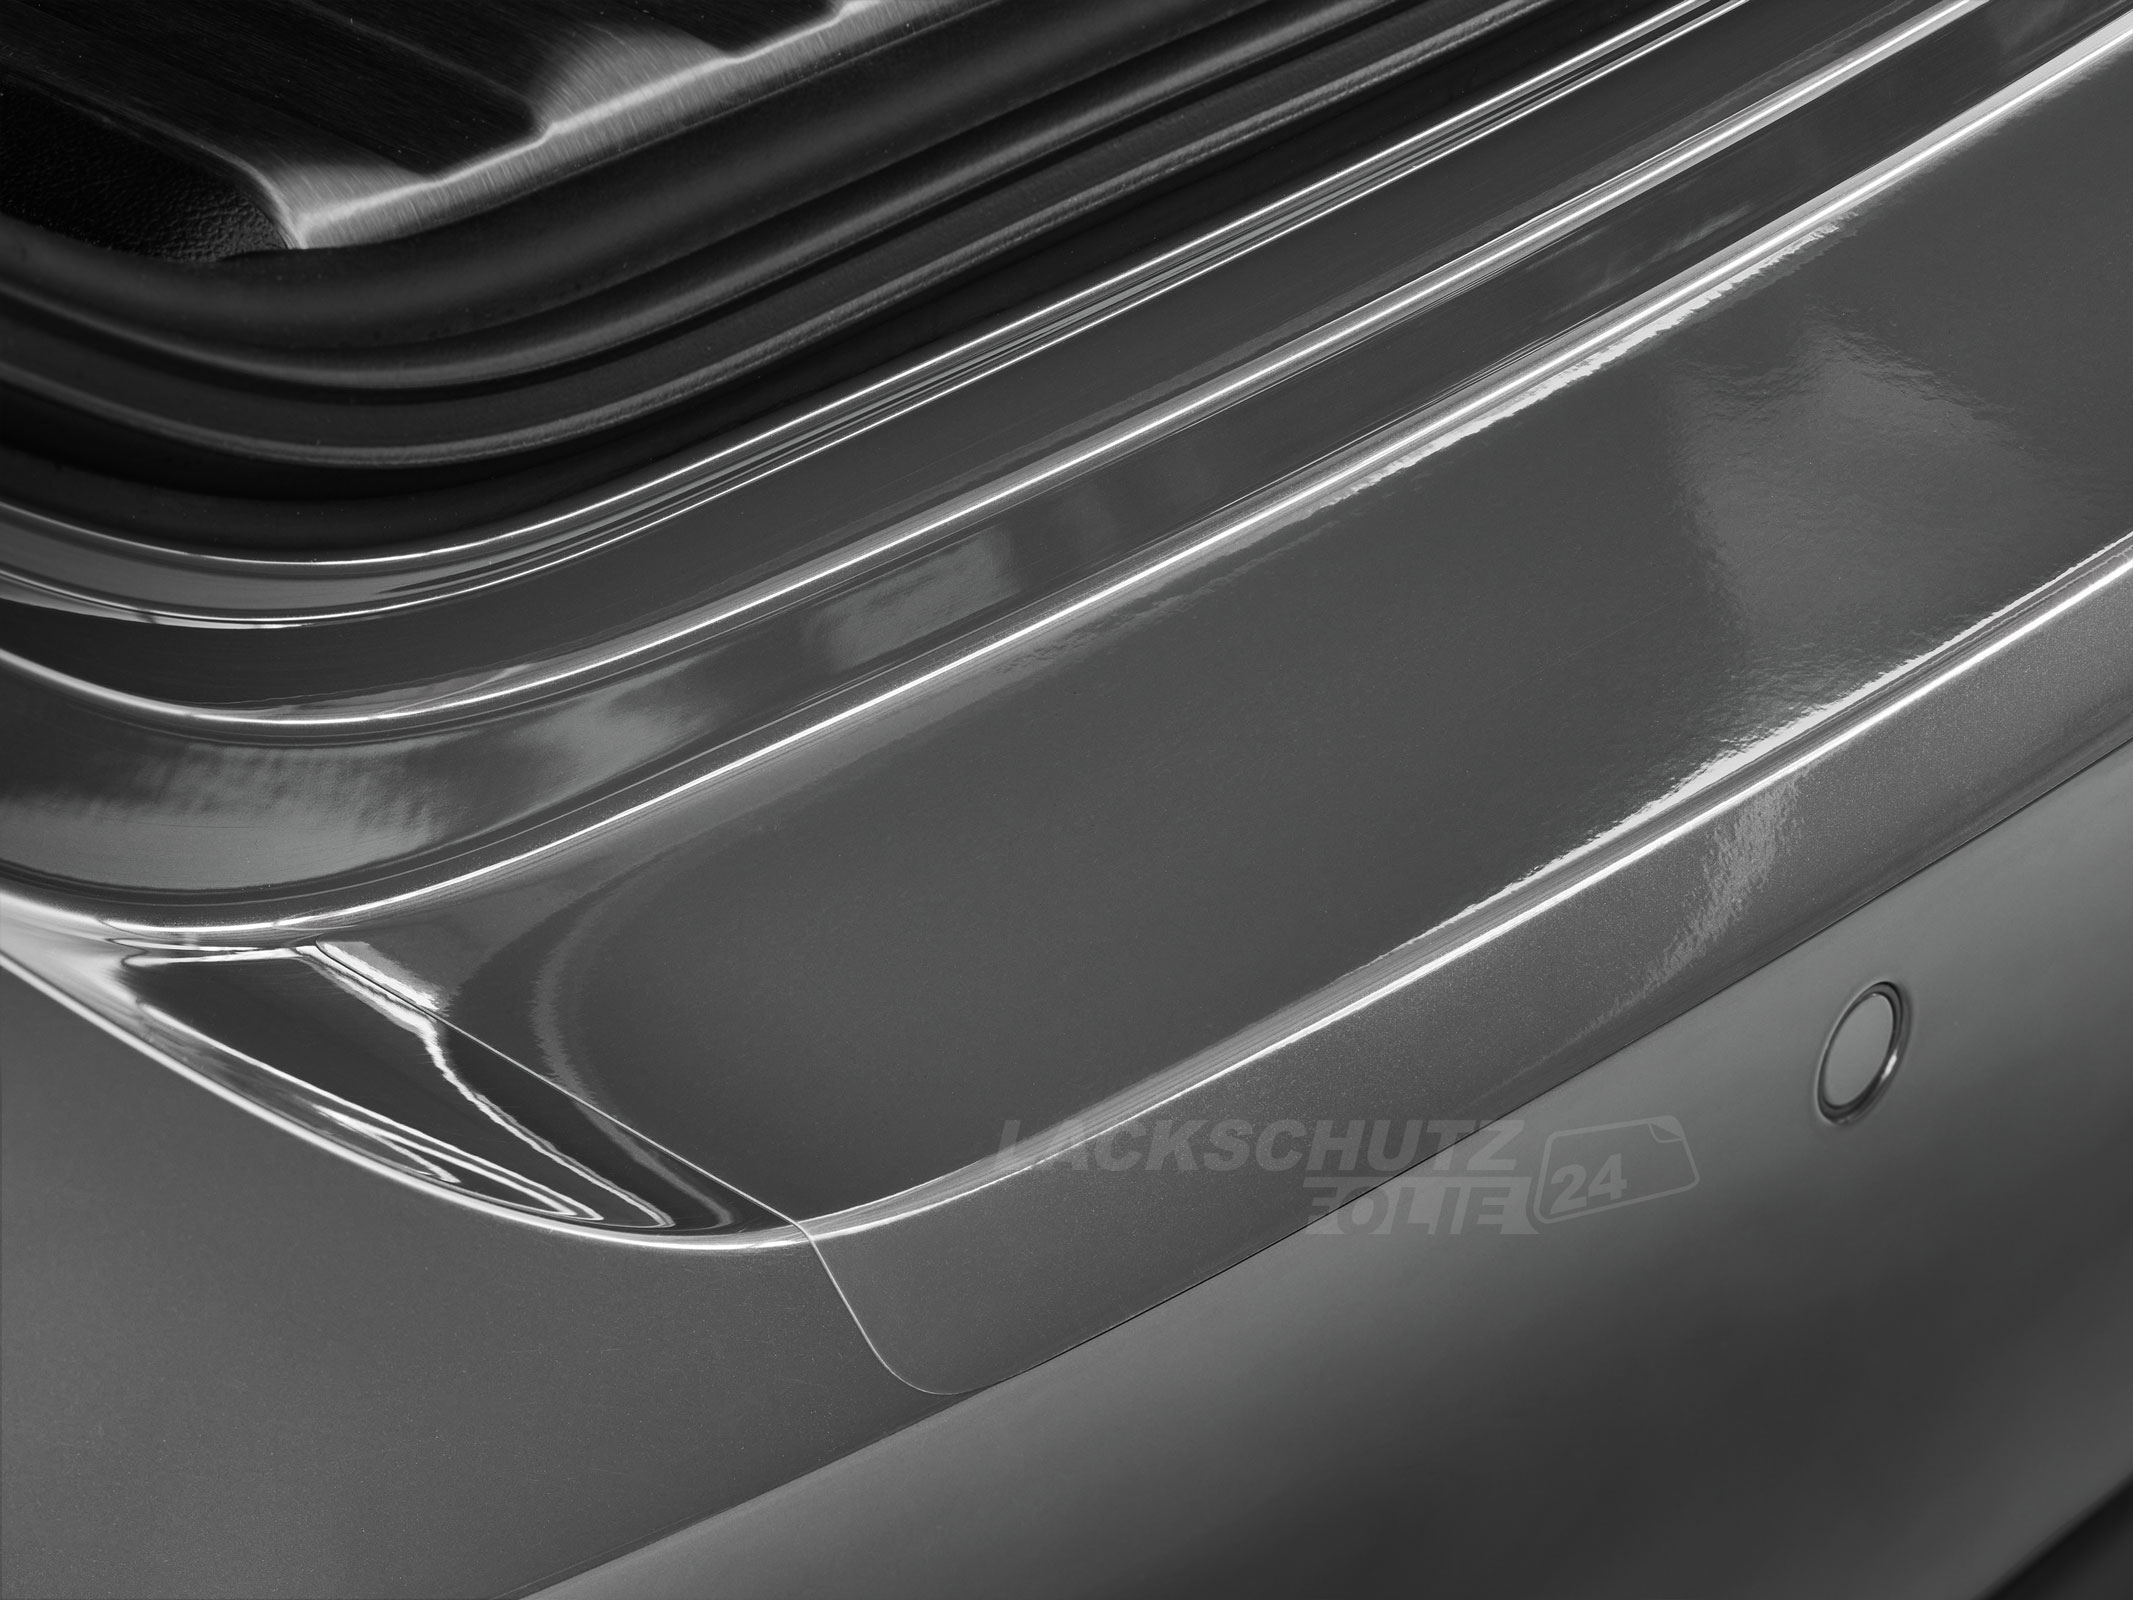 Ladekantenschutzfolie - Transparent Glatt Hochglänzend 240 µm stark für Audi A6 Avant (Kombi) C6, Typ 4F, BJ 2005-10/2008